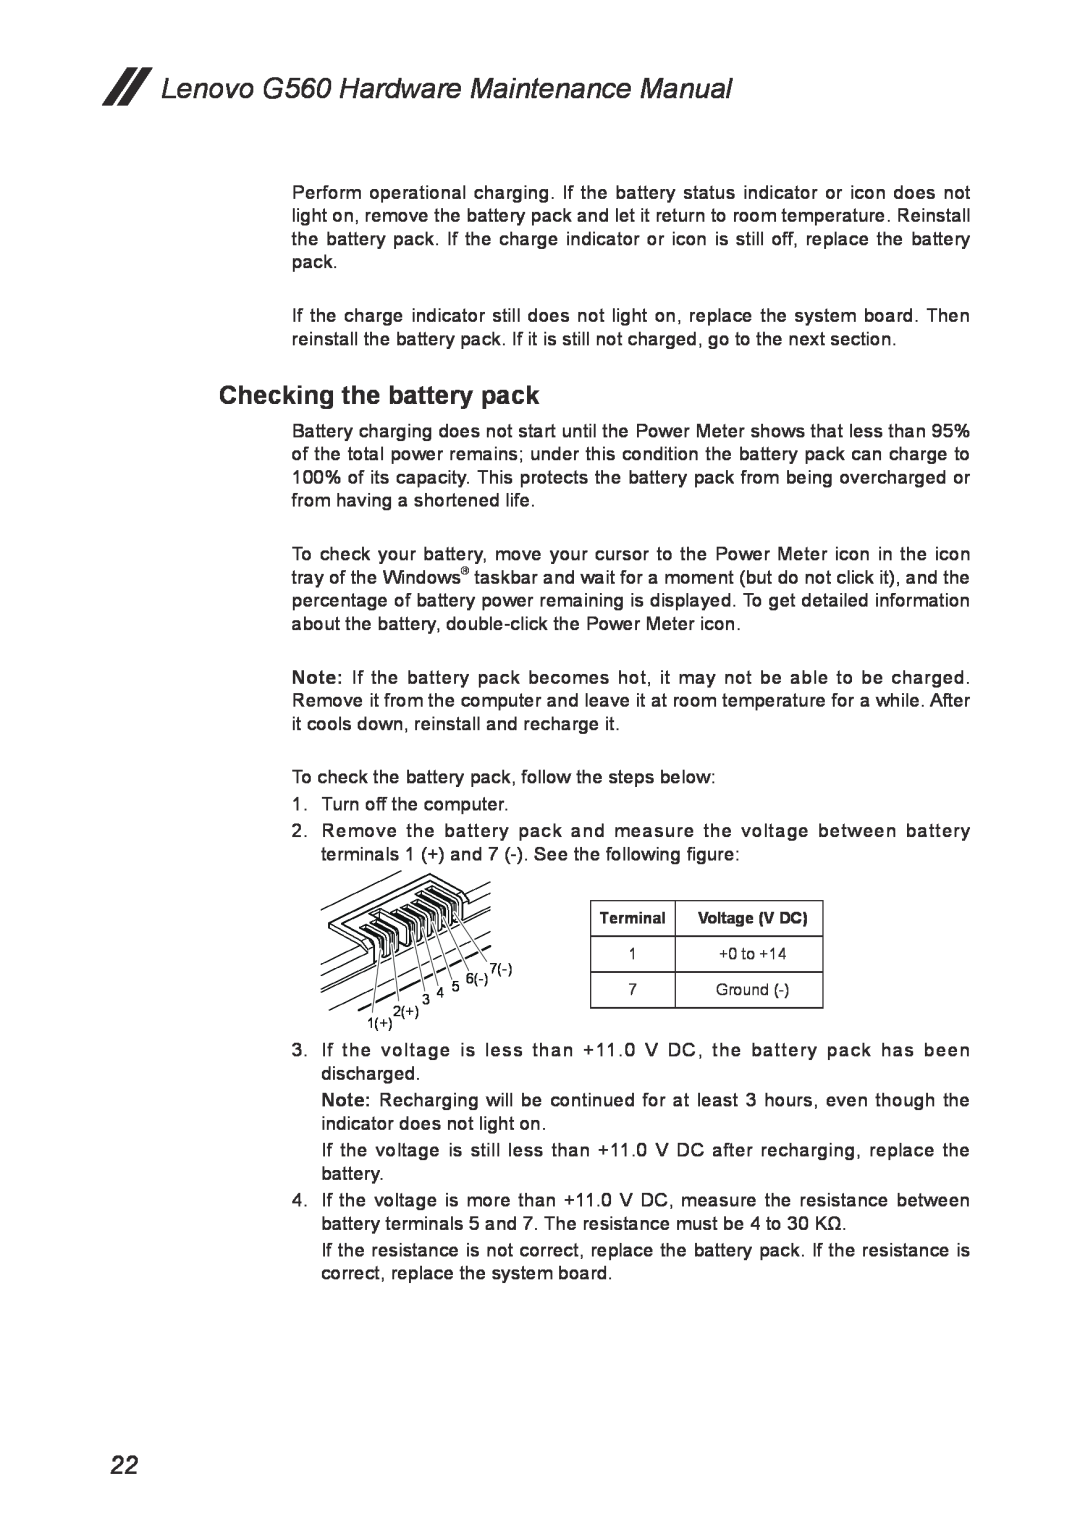 Lenovo manual Checking the battery pack, Lenovo G560 Hardware Maintenance Manual 